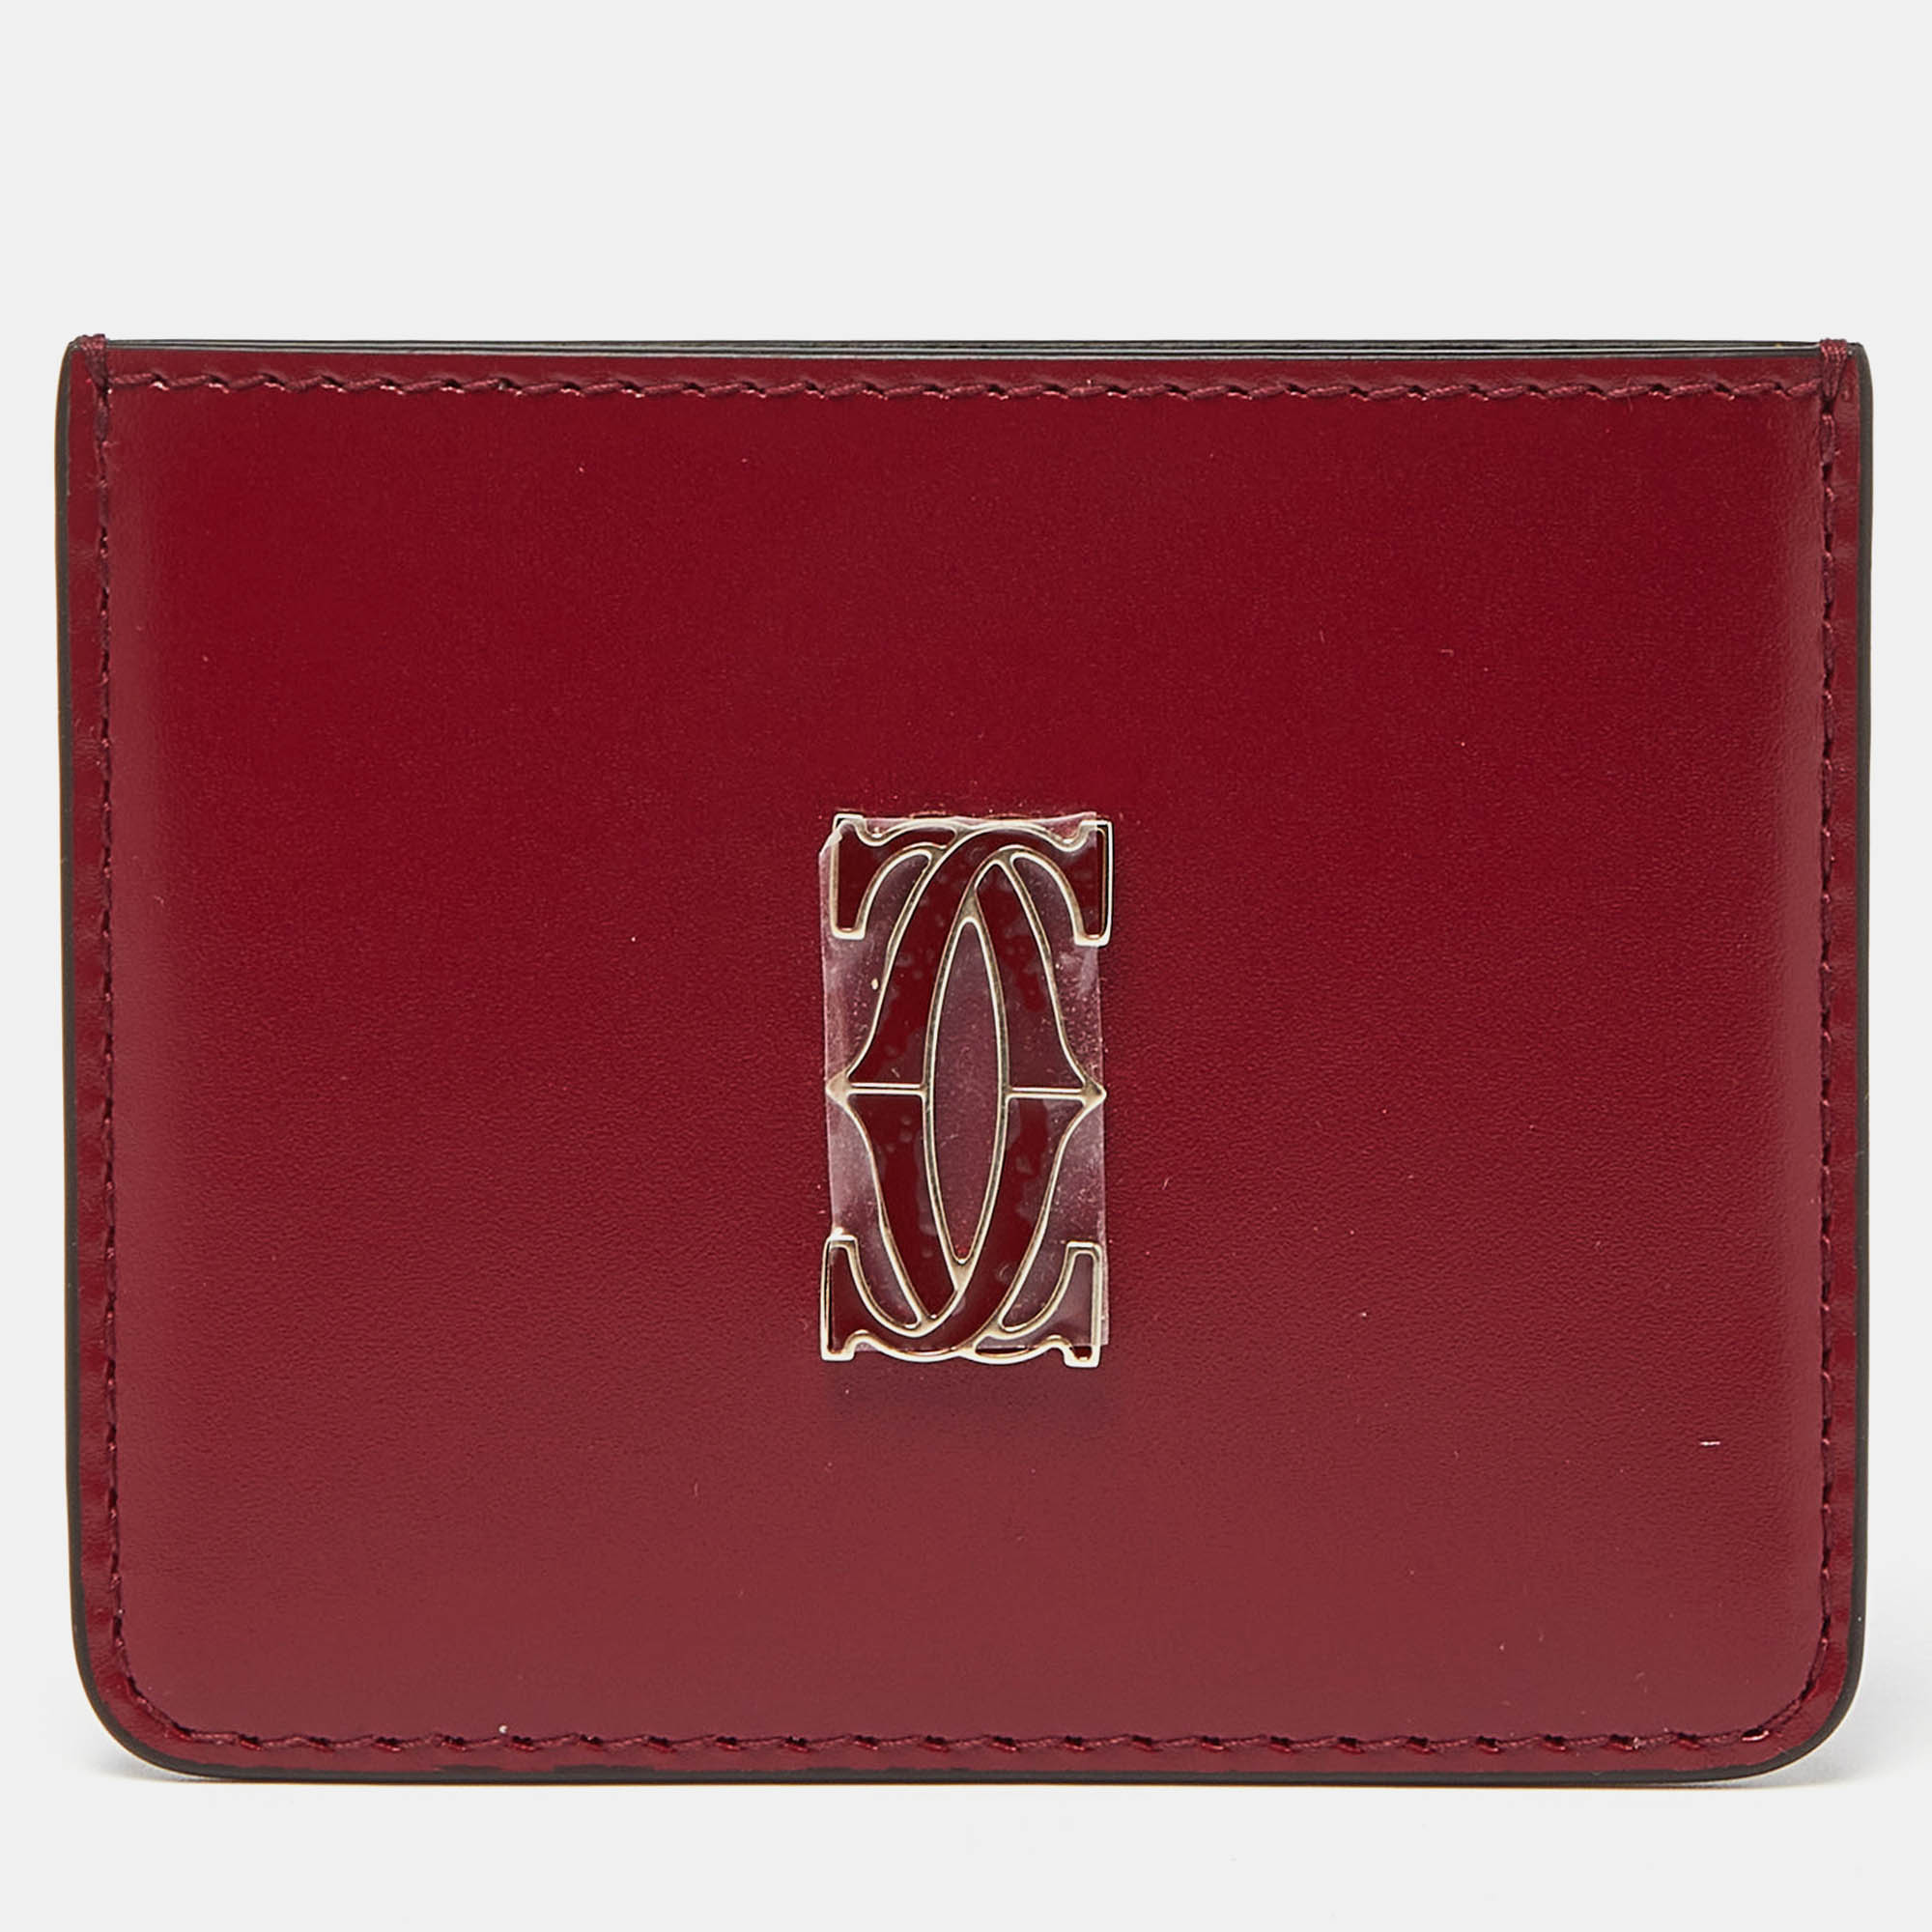 Cartier red leather double c de cartier card holder